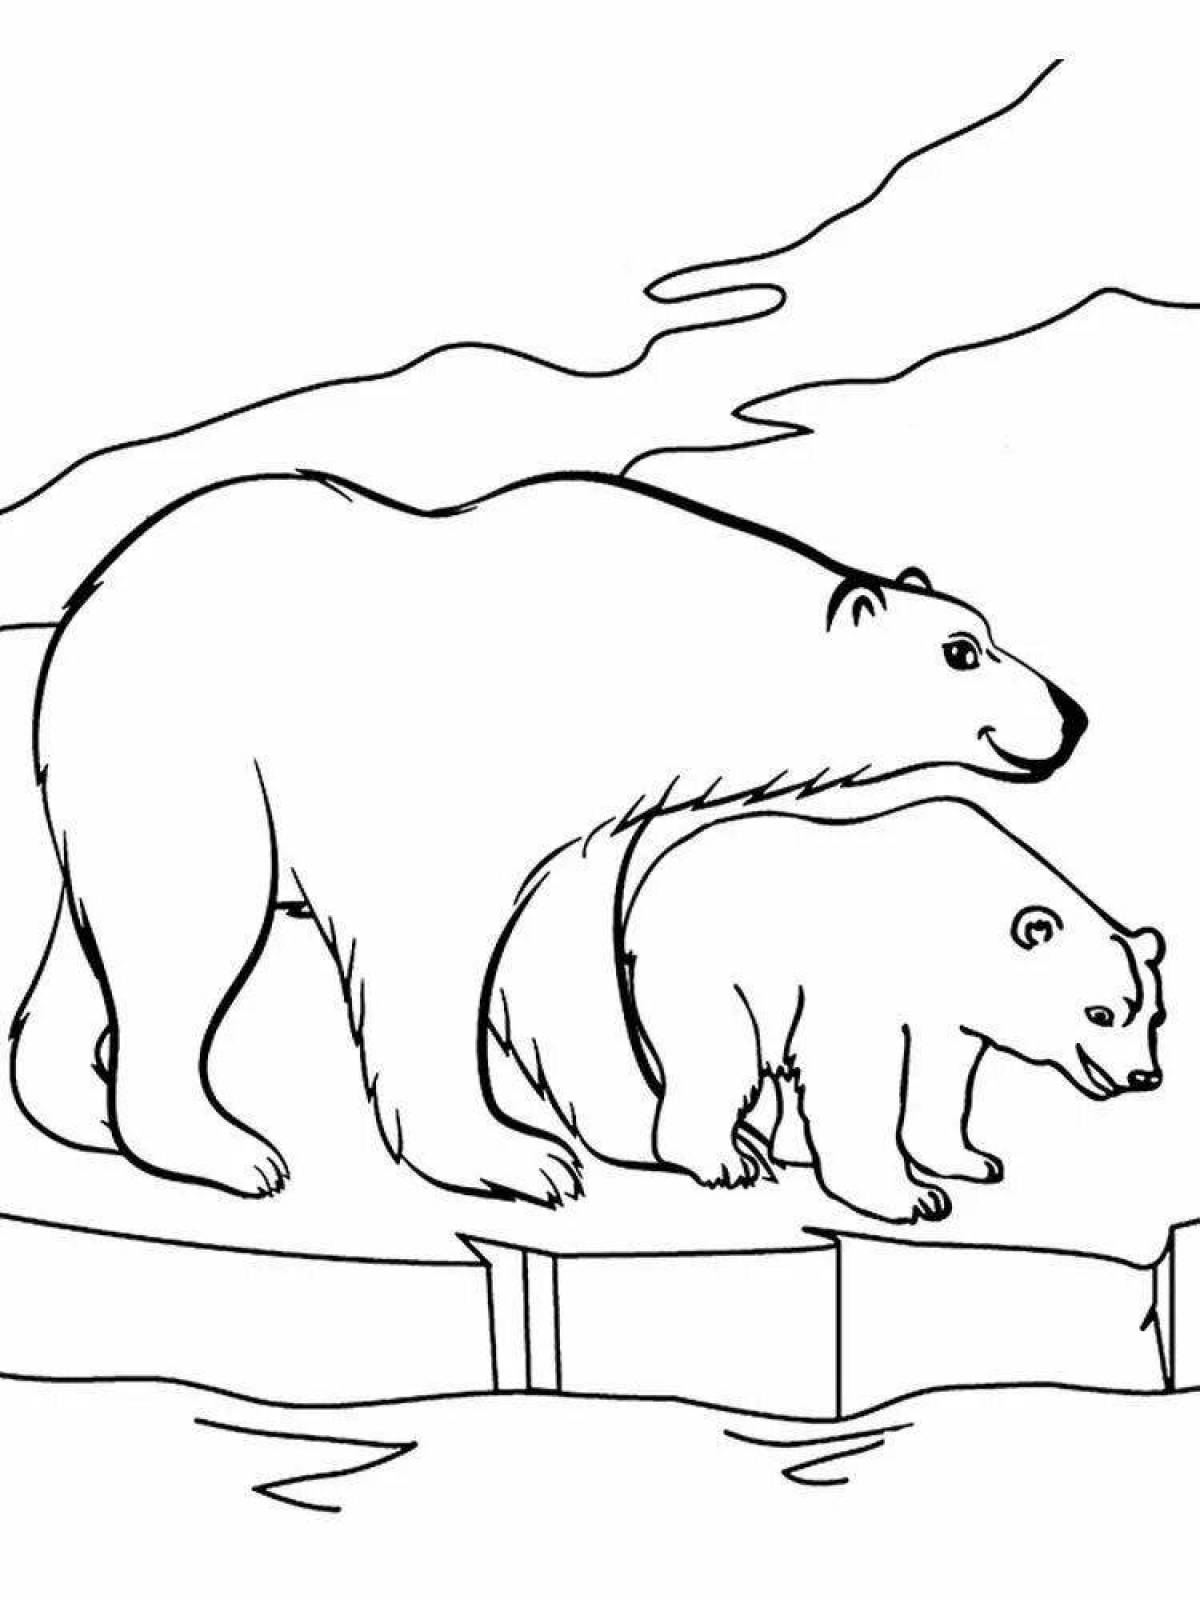 Arctic polar bear coloring page